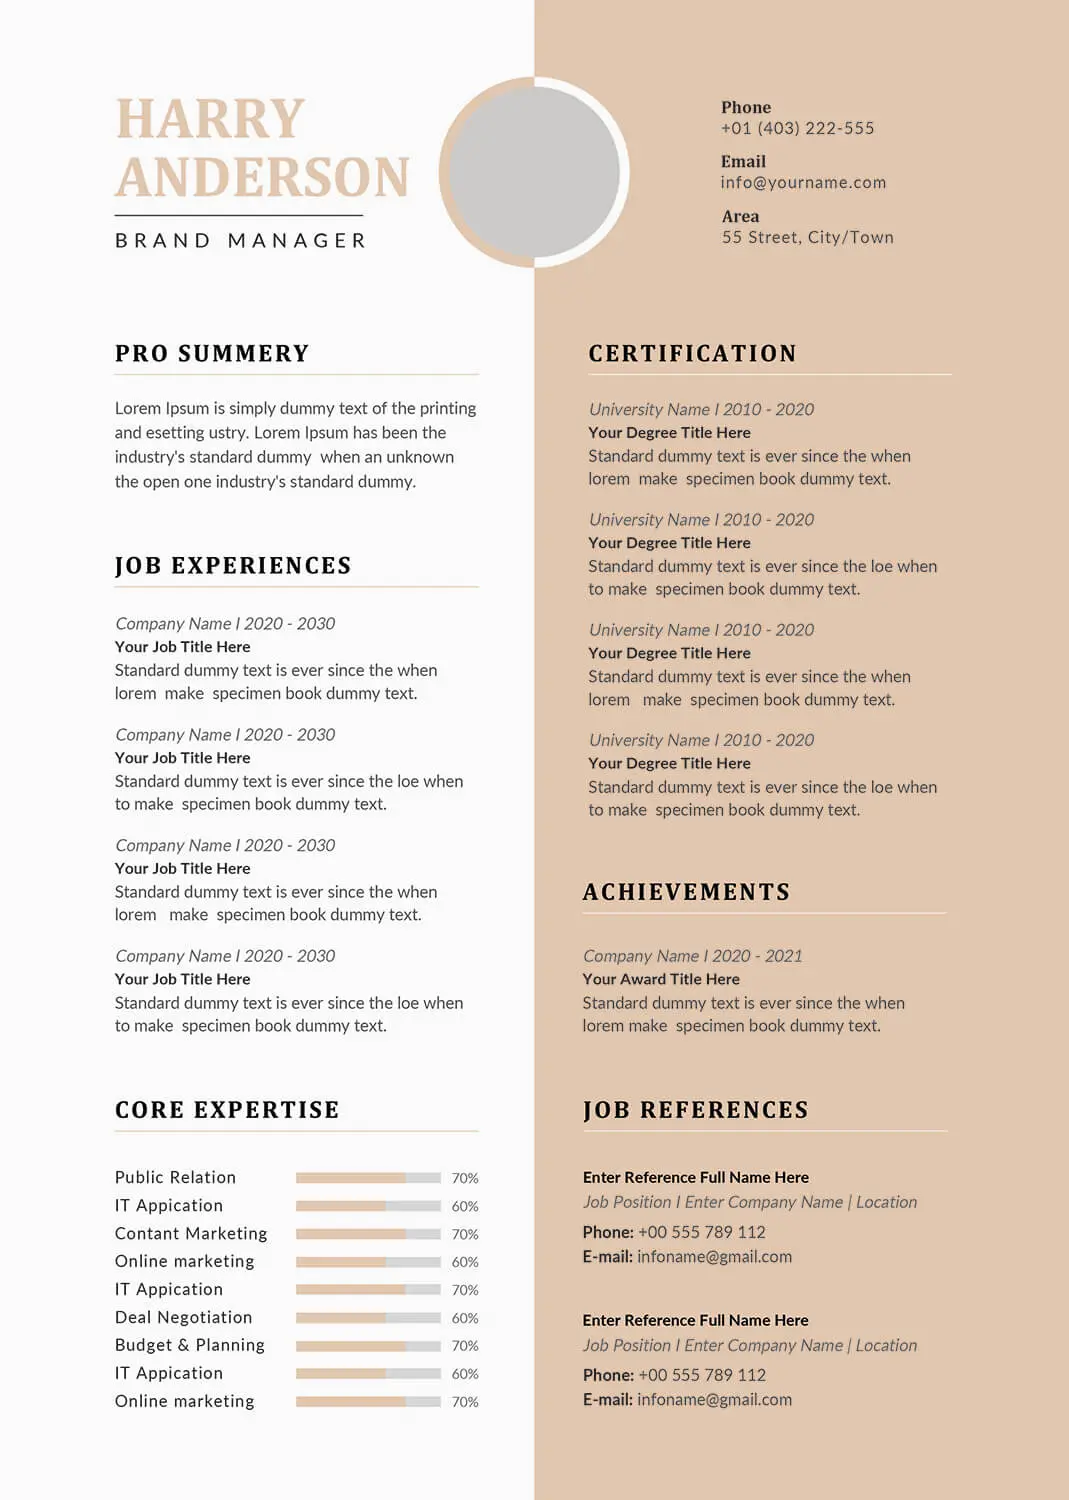 brand-manager-resume